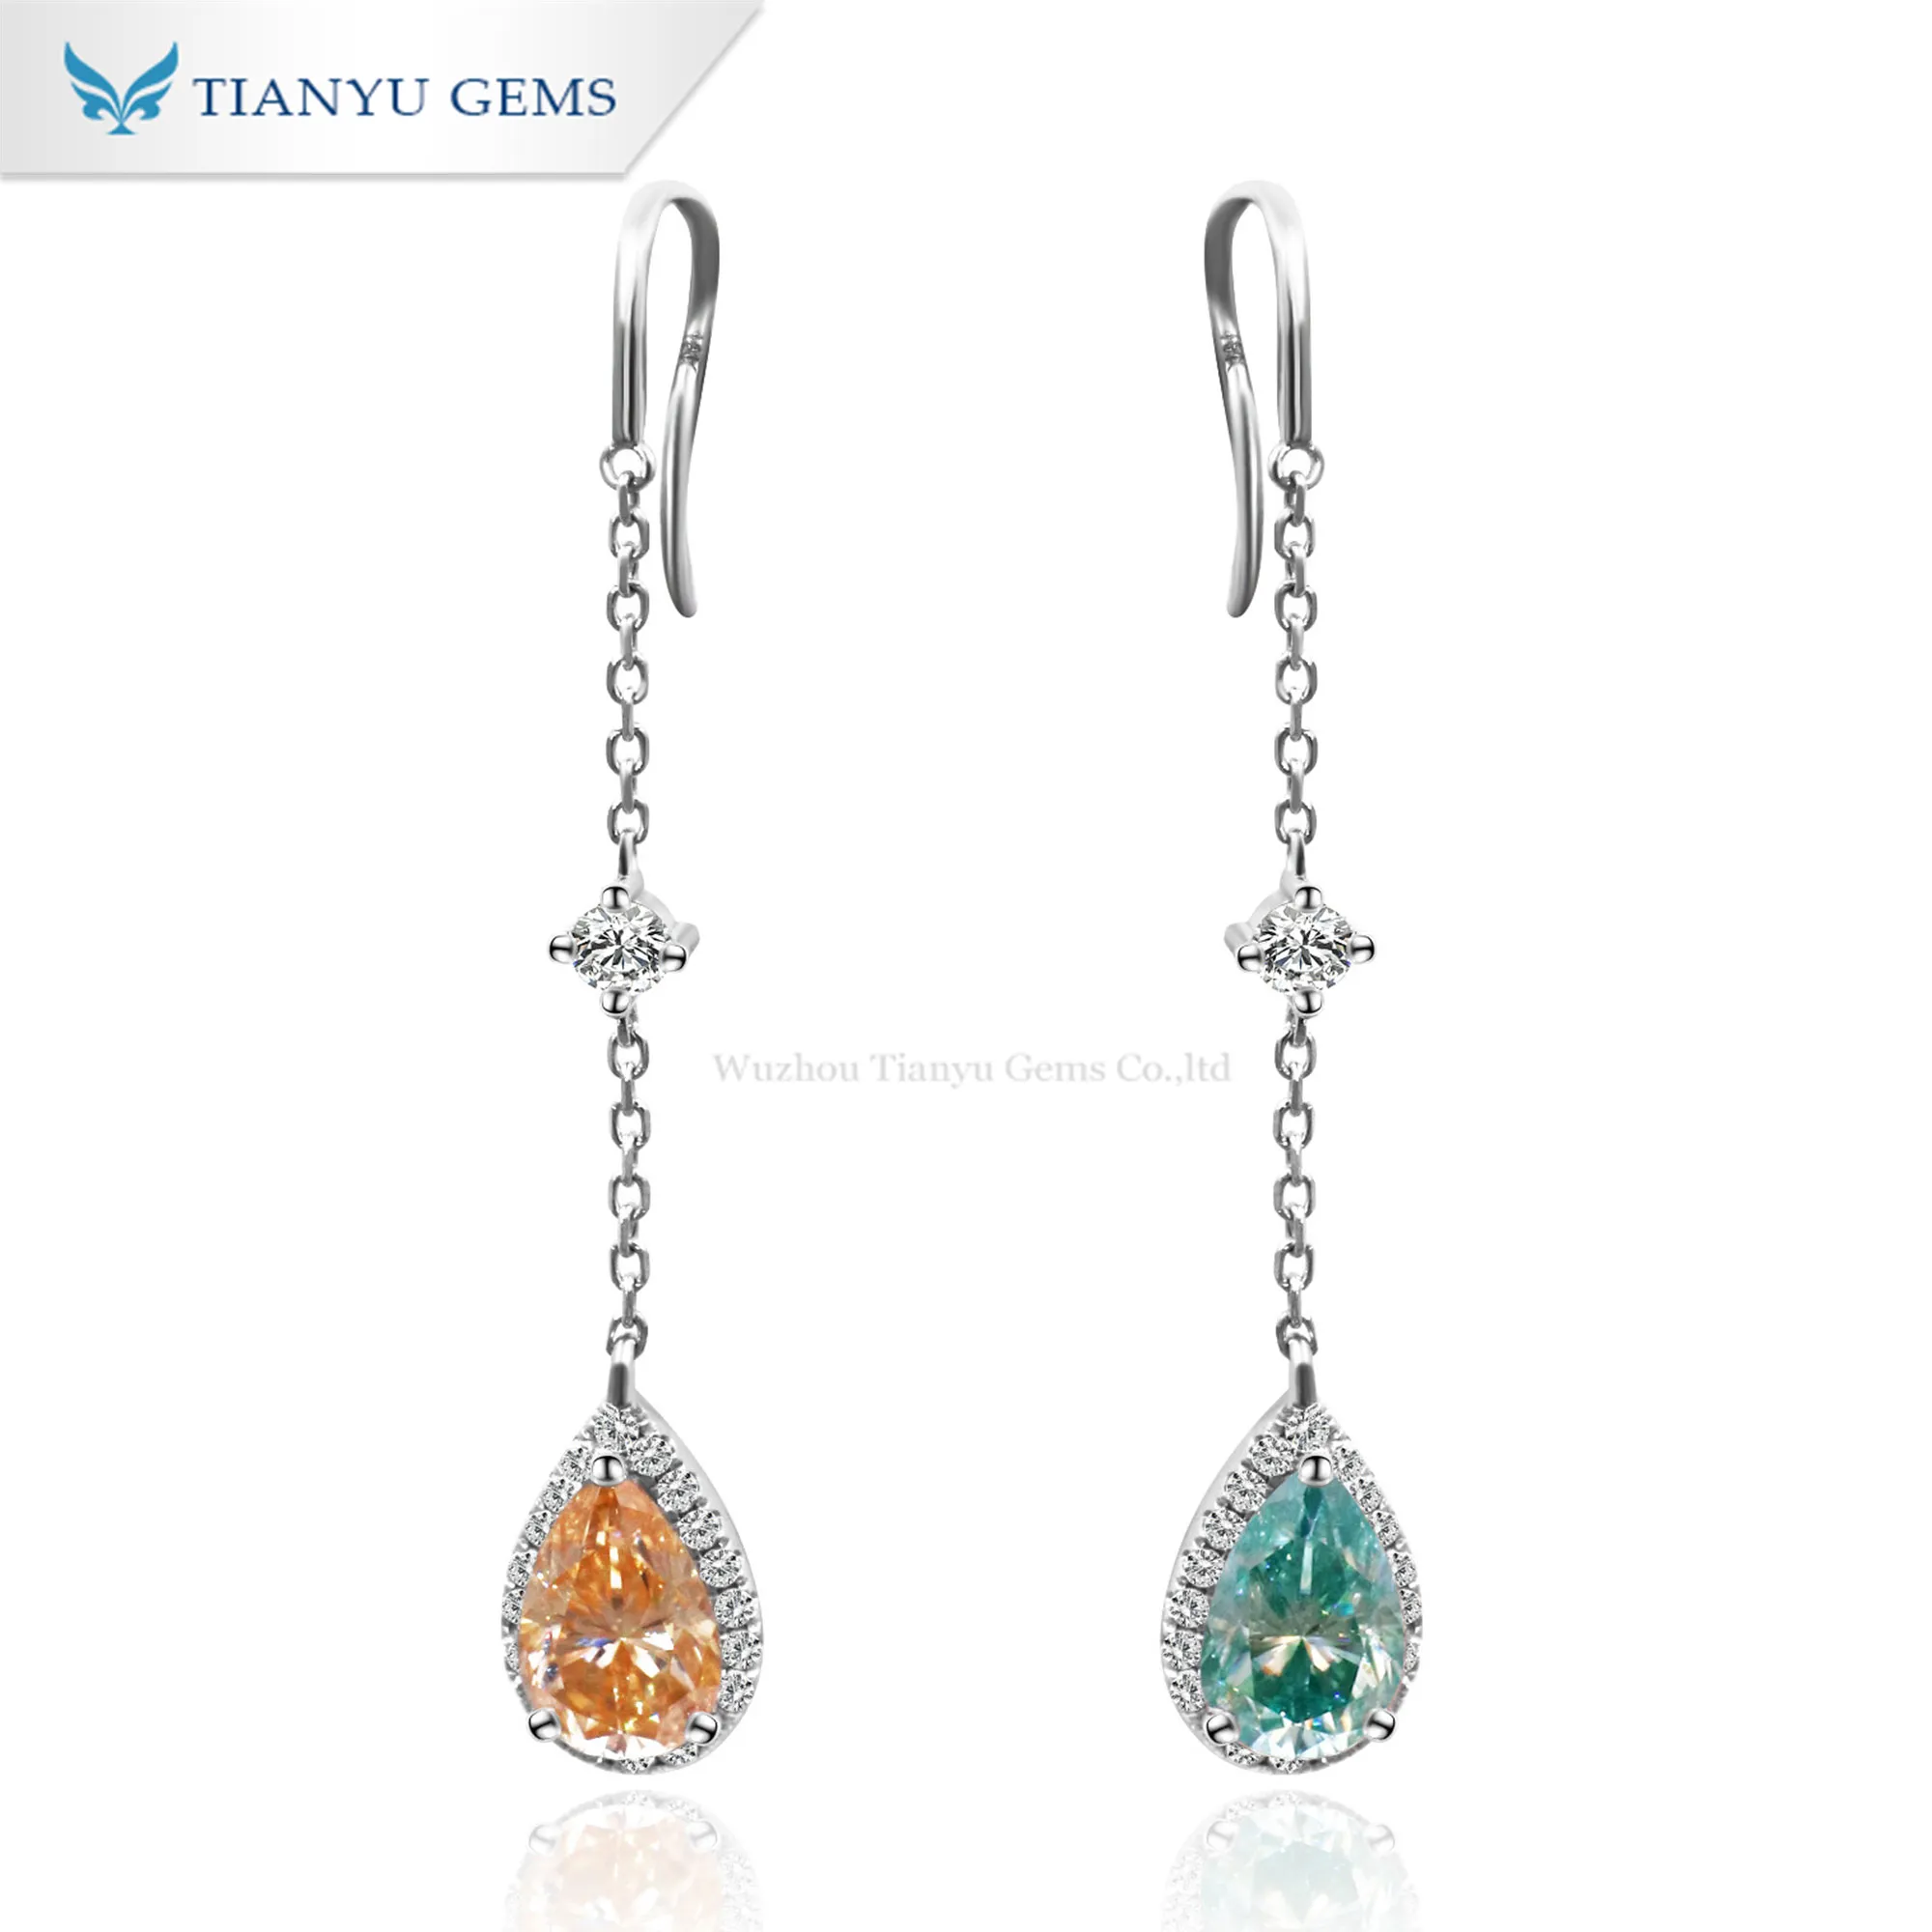 Tianyu gems drop earring 1ct COLOR moissanite pear shape white gold material women long earring